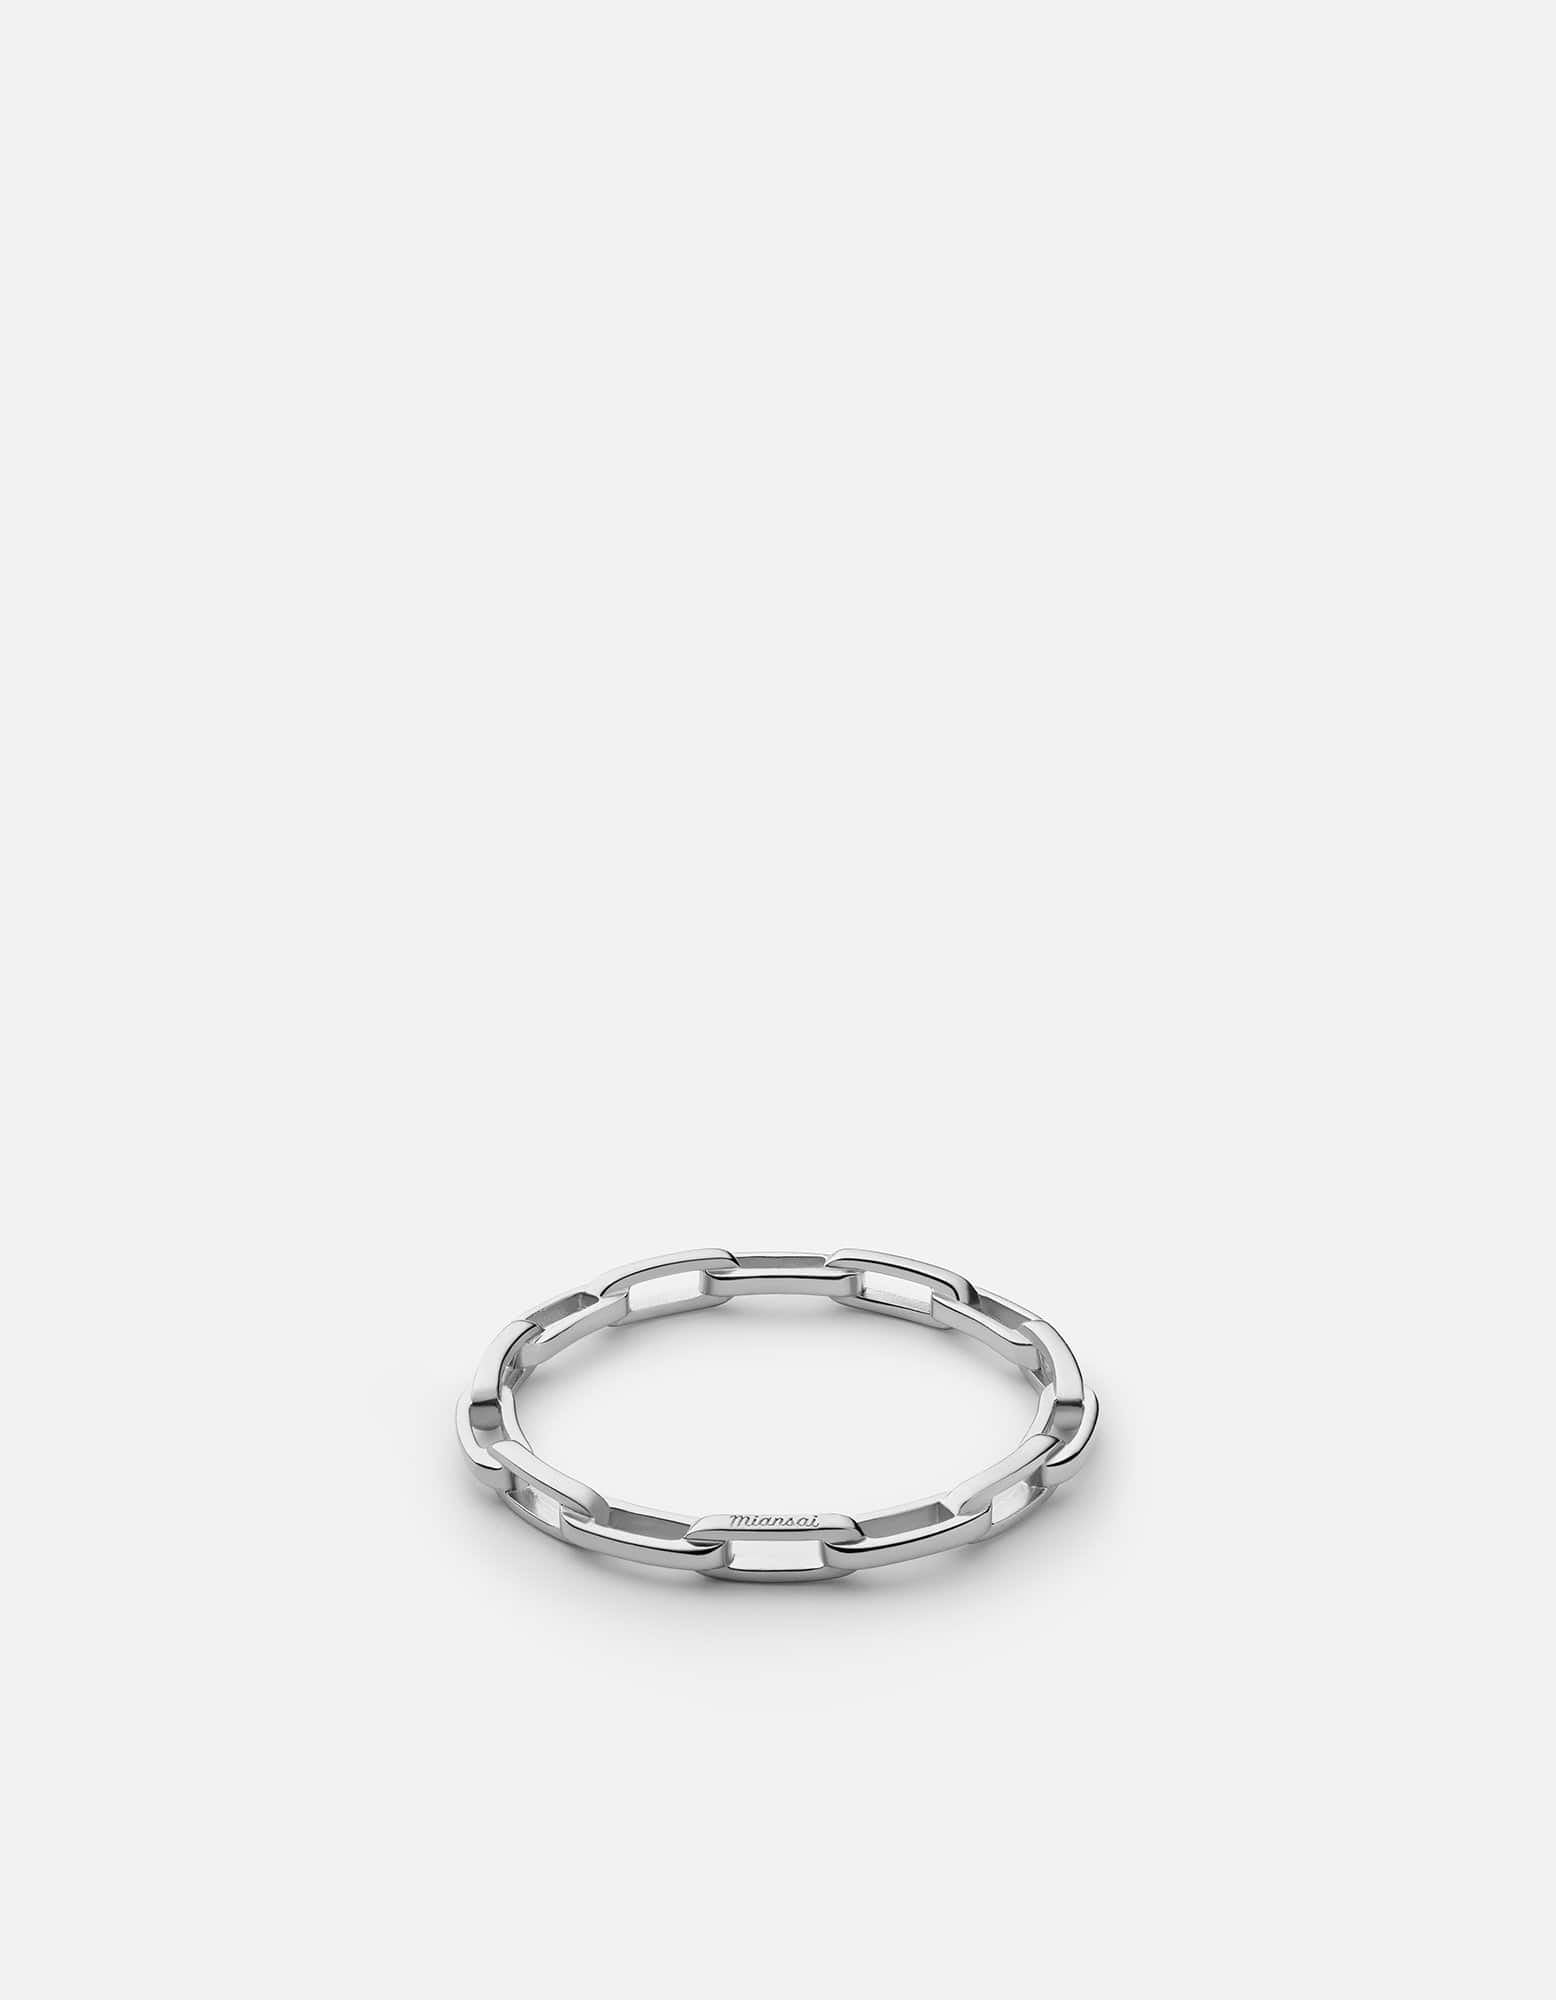 Miansai Men's Volt Link Ring, Sterling Silver, Size 11